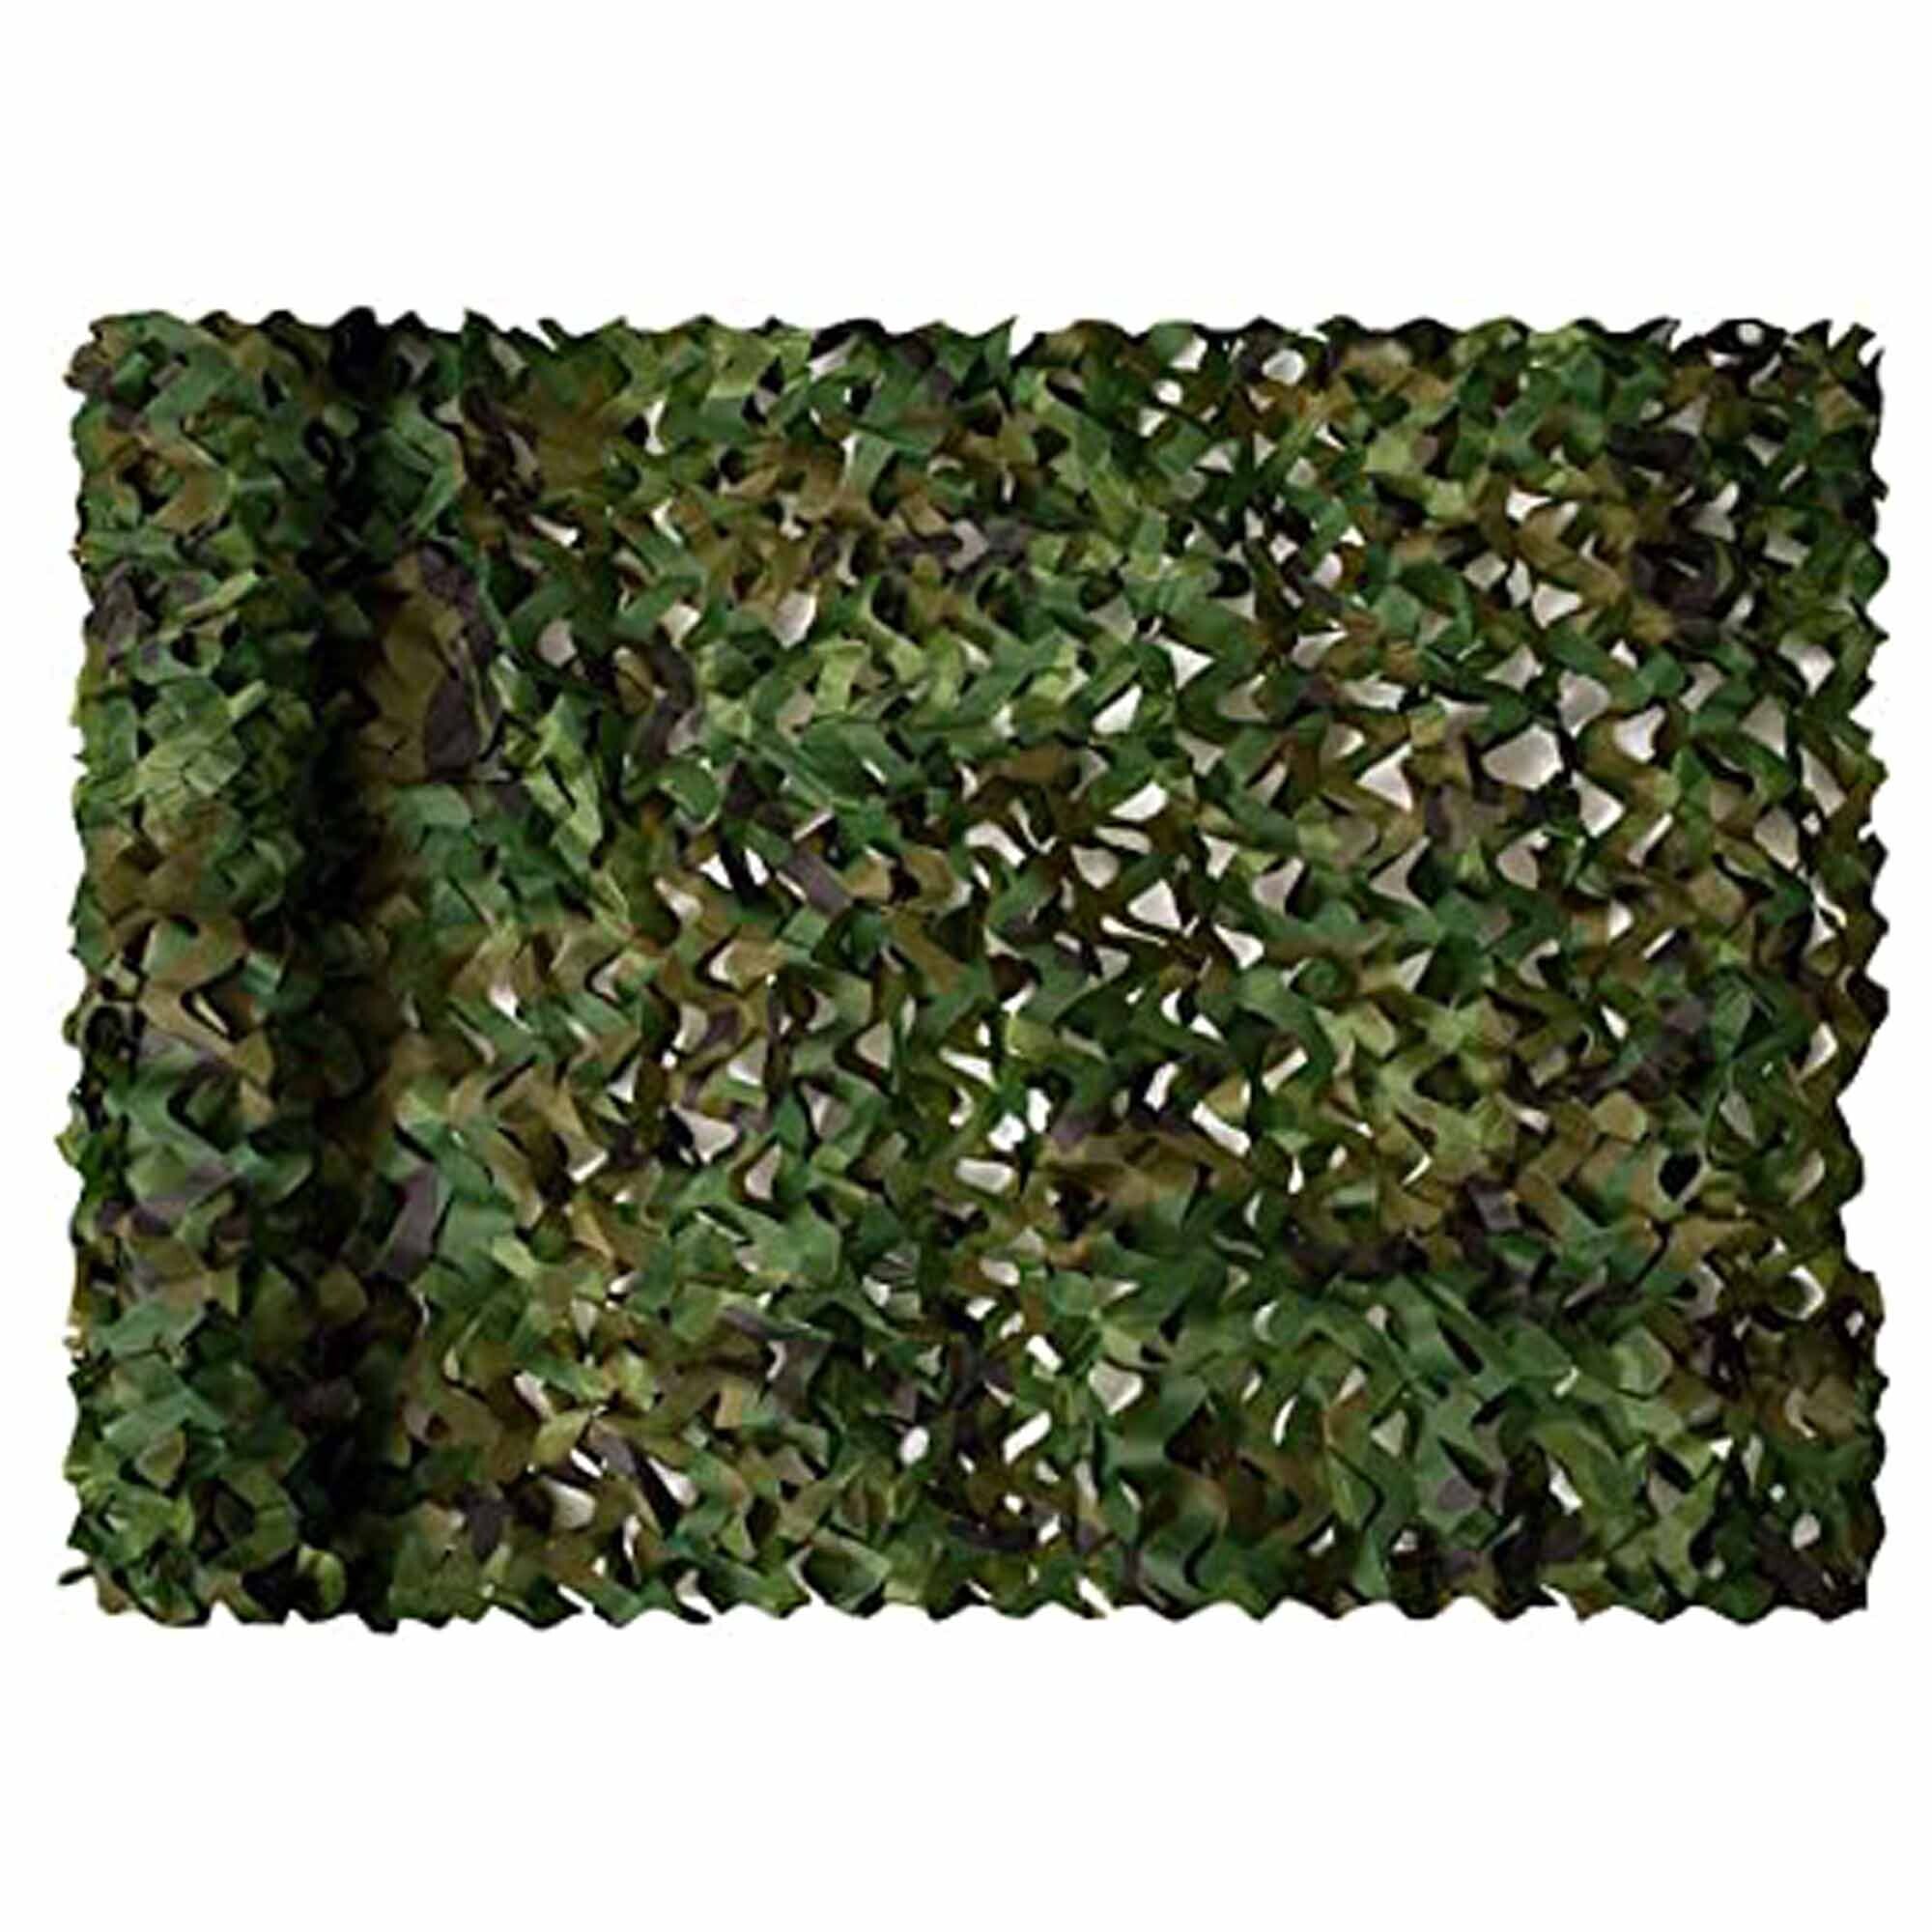 Red de camuflaje verde - 3x3 m